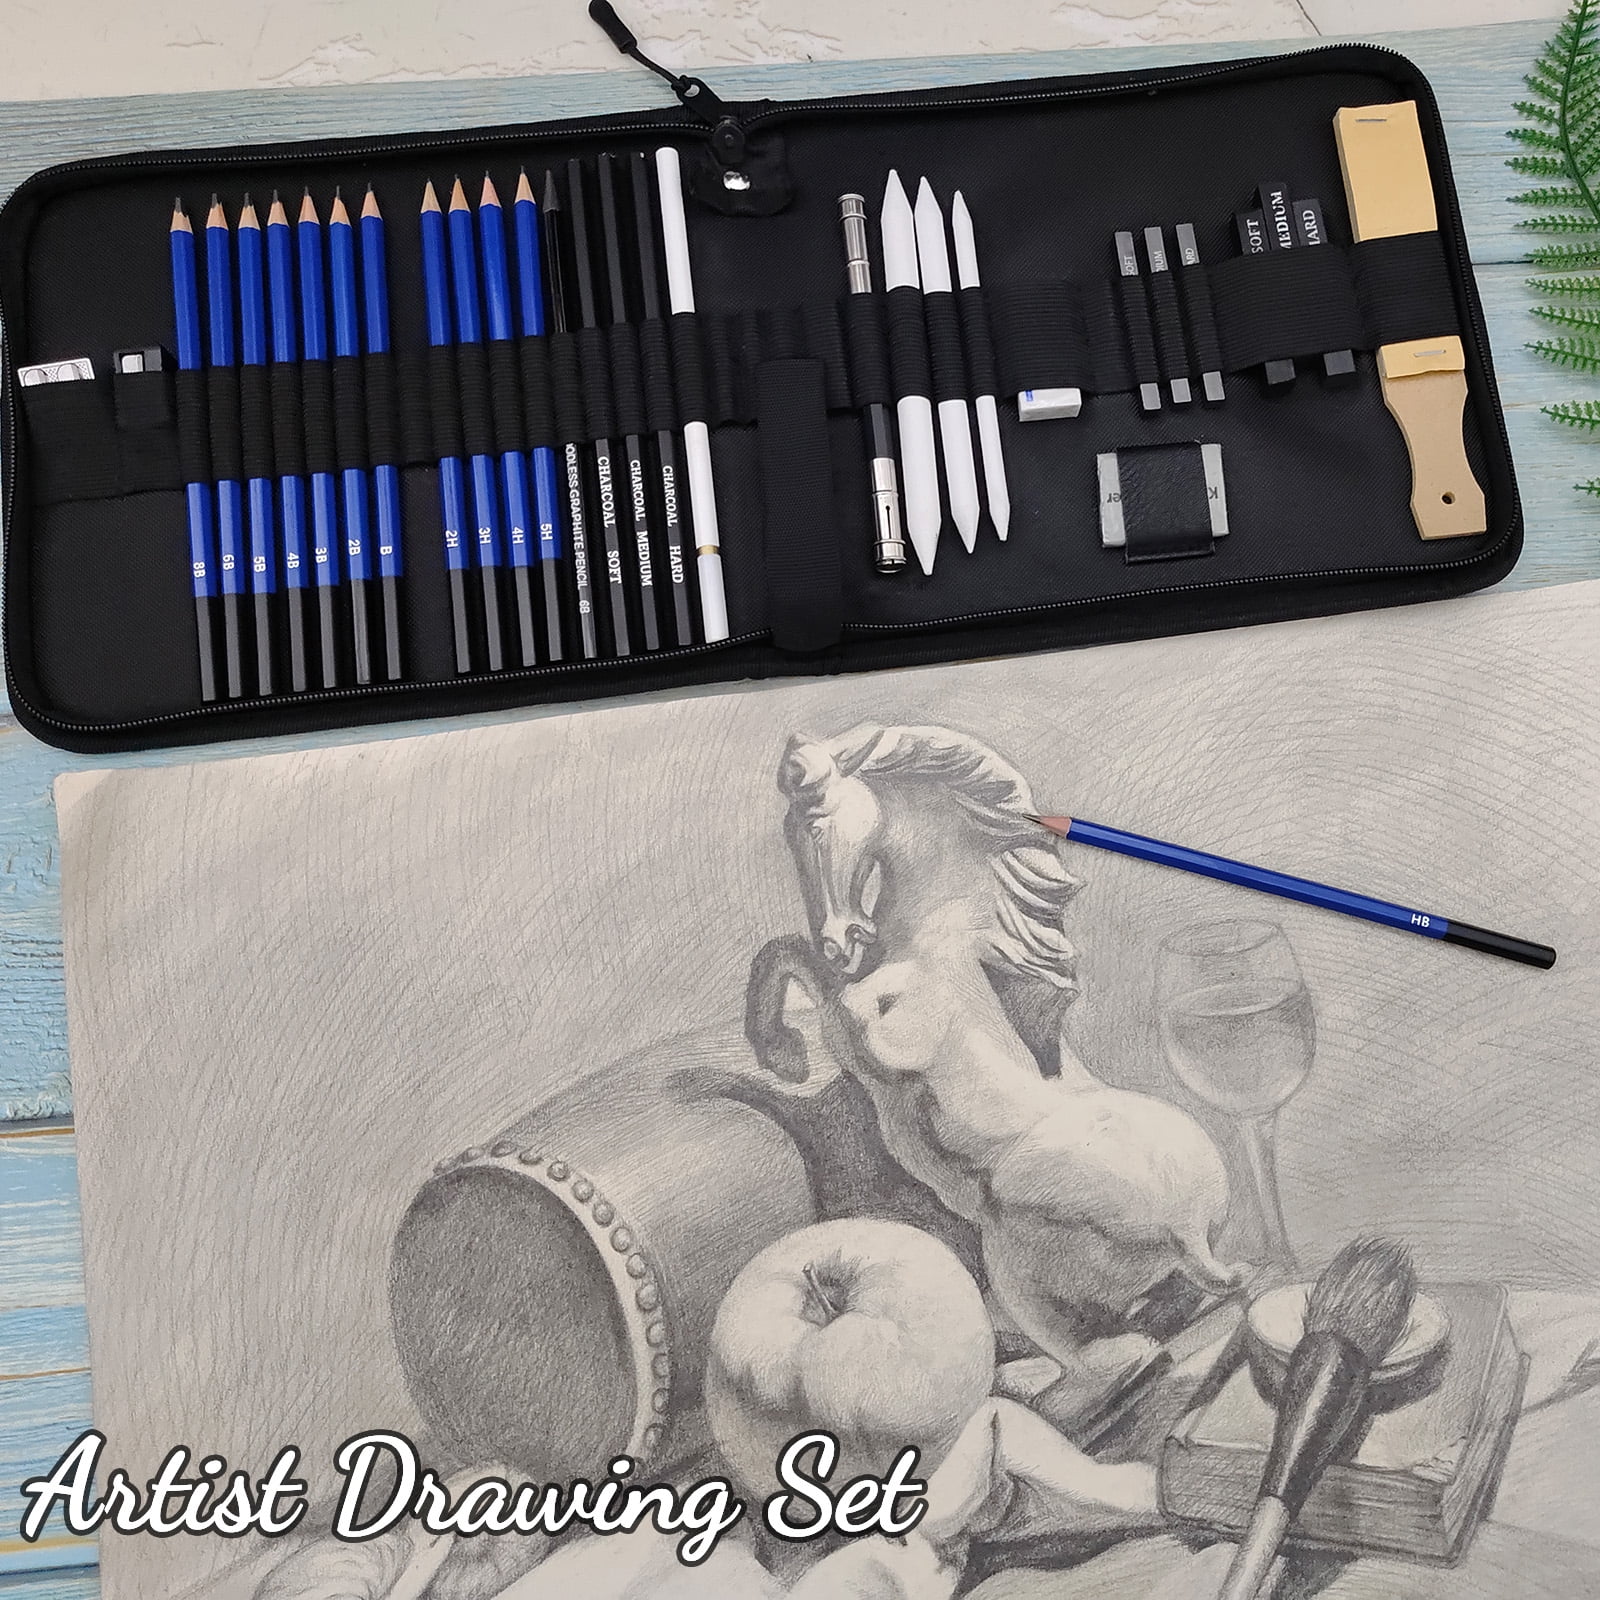 Vobou 72pcs Art Supplies Set, Colored Drawing Pencils Art Kit- Sketching,  Graphite Pencils With Portable Case, Ideal School Art Supplies for Artists